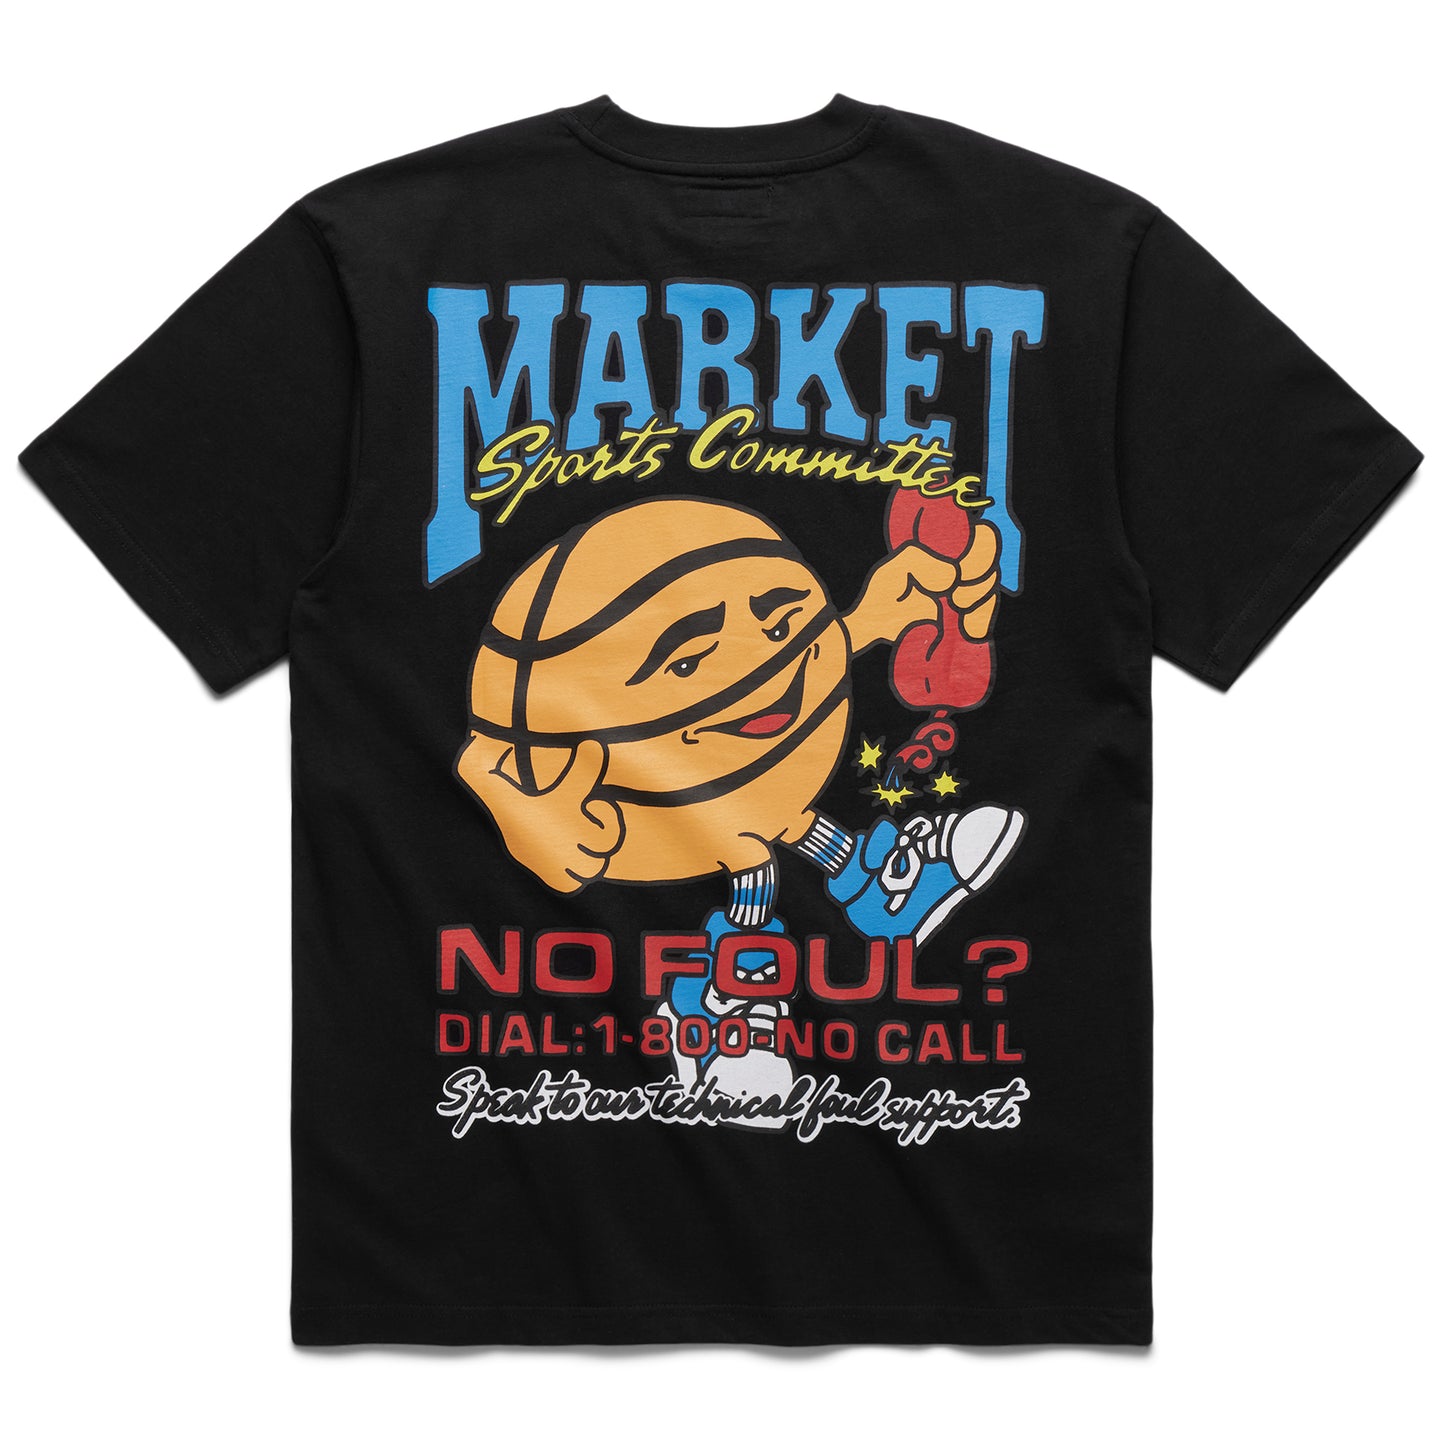 MARKET Sports Committee T-Shirt